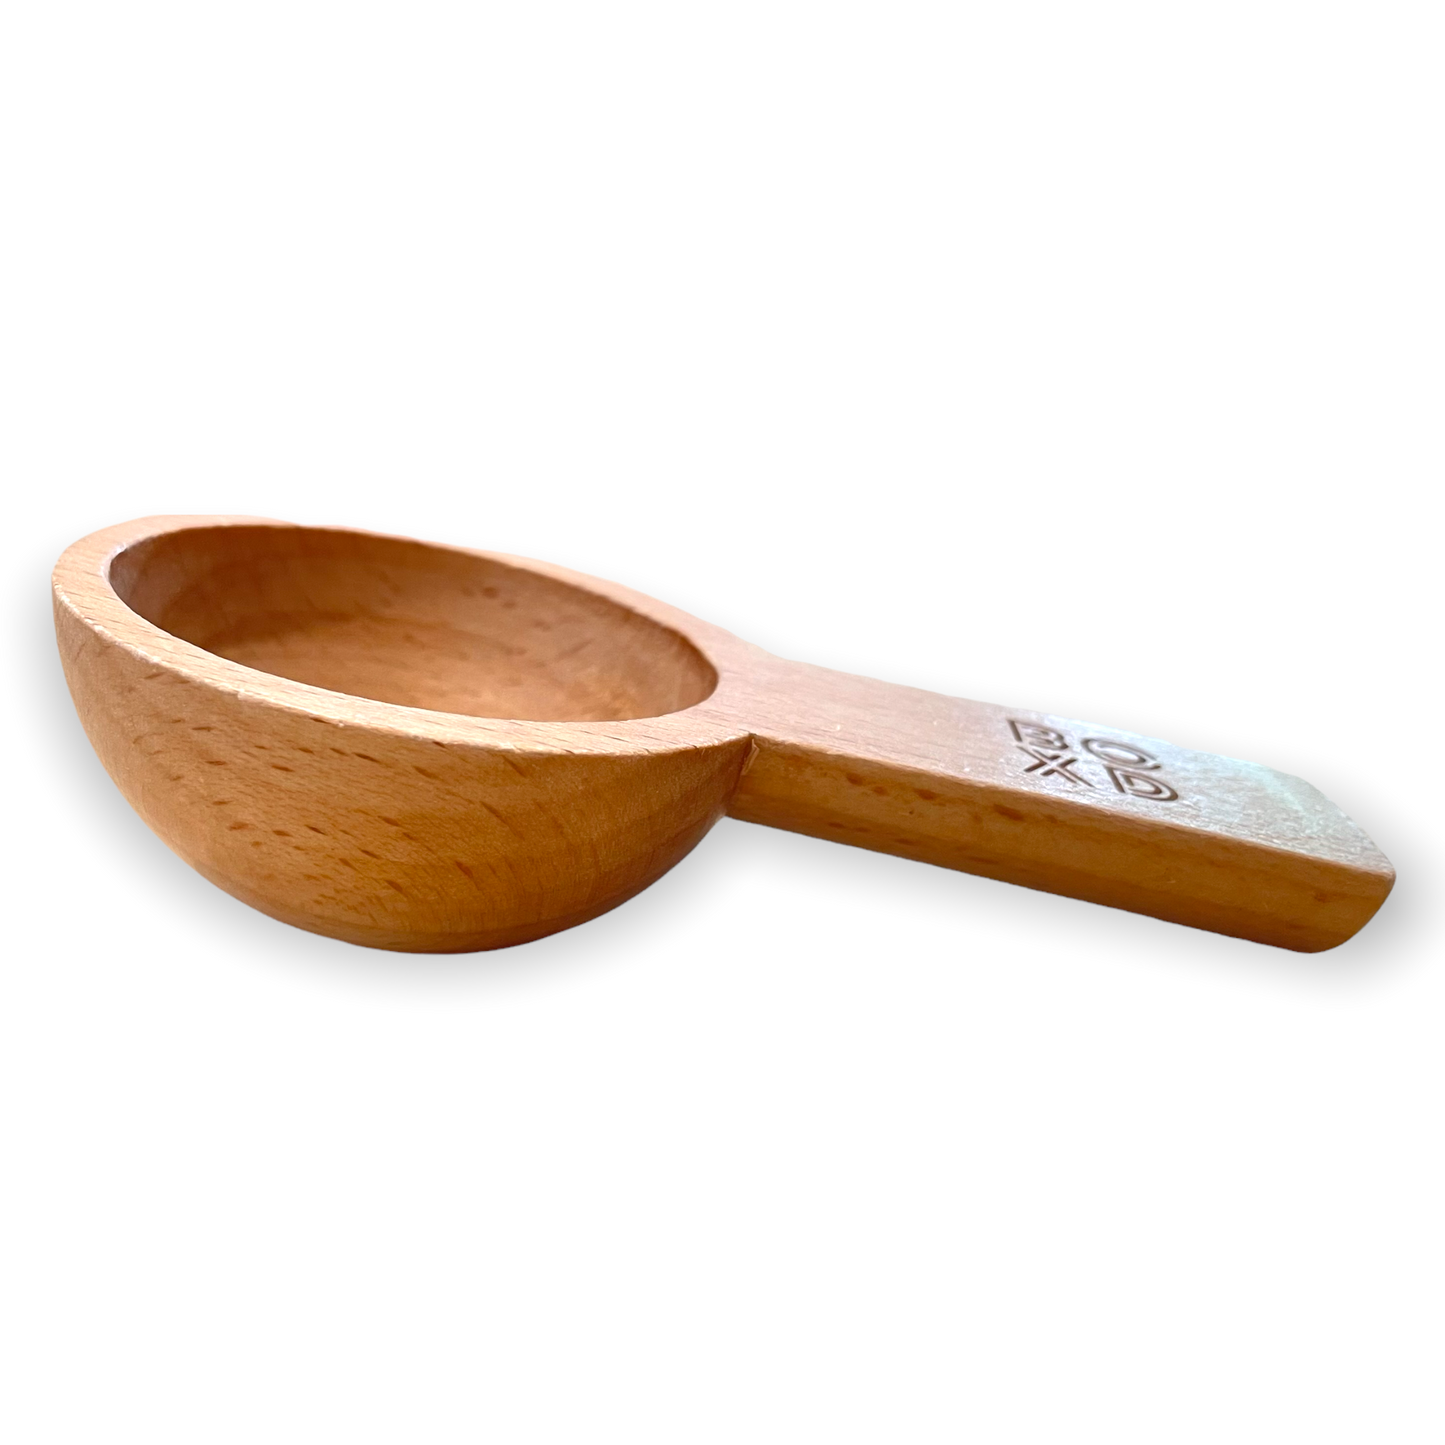 Cuchara de madera - 2 cucharadas